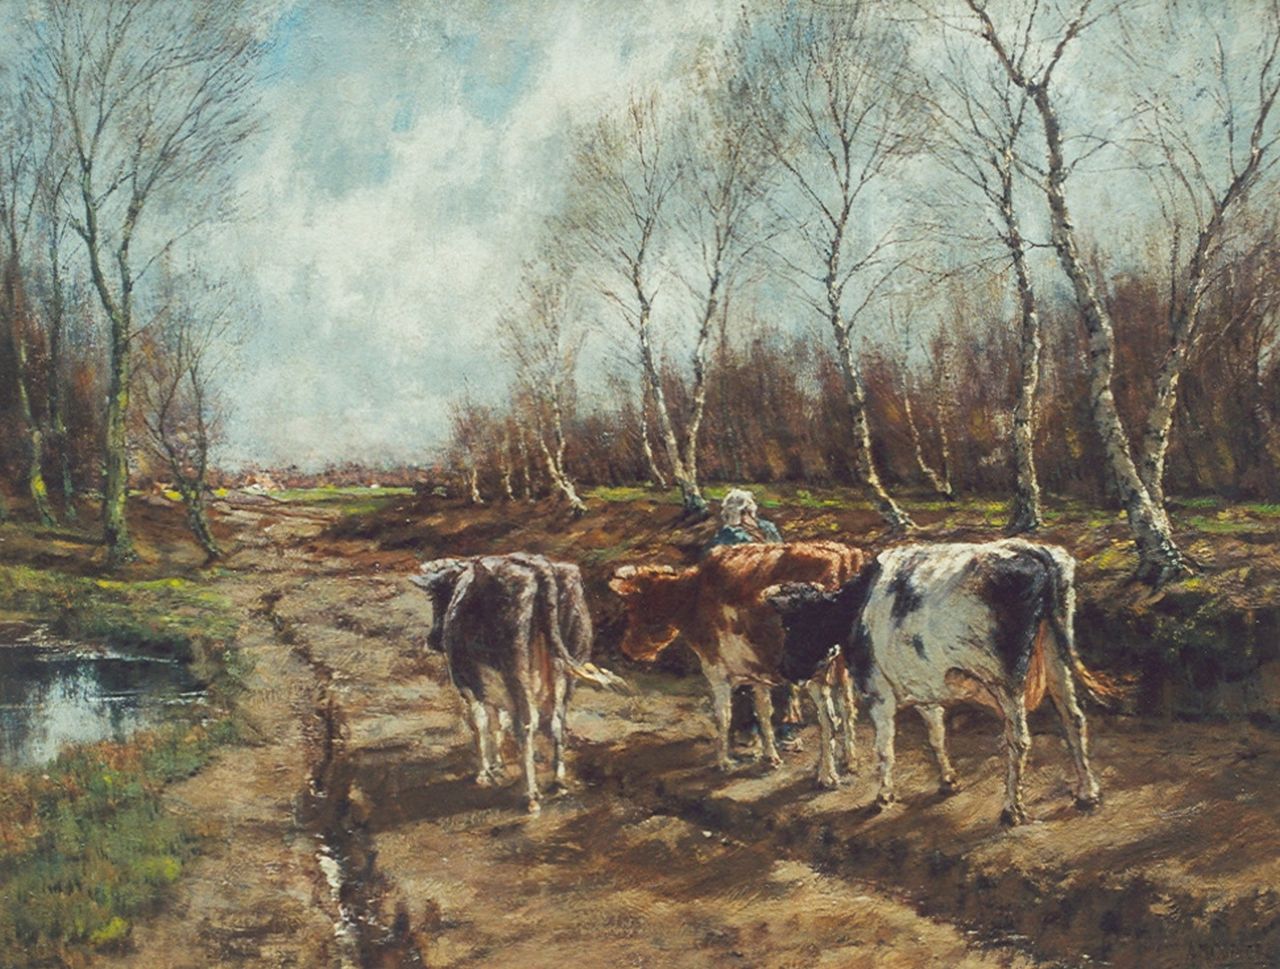 Gorter A.M.  | 'Arnold' Marc Gorter, Cows in an autumn landscape, Öl auf Leinwand 66,8 x 87,0 cm, signed l.r.